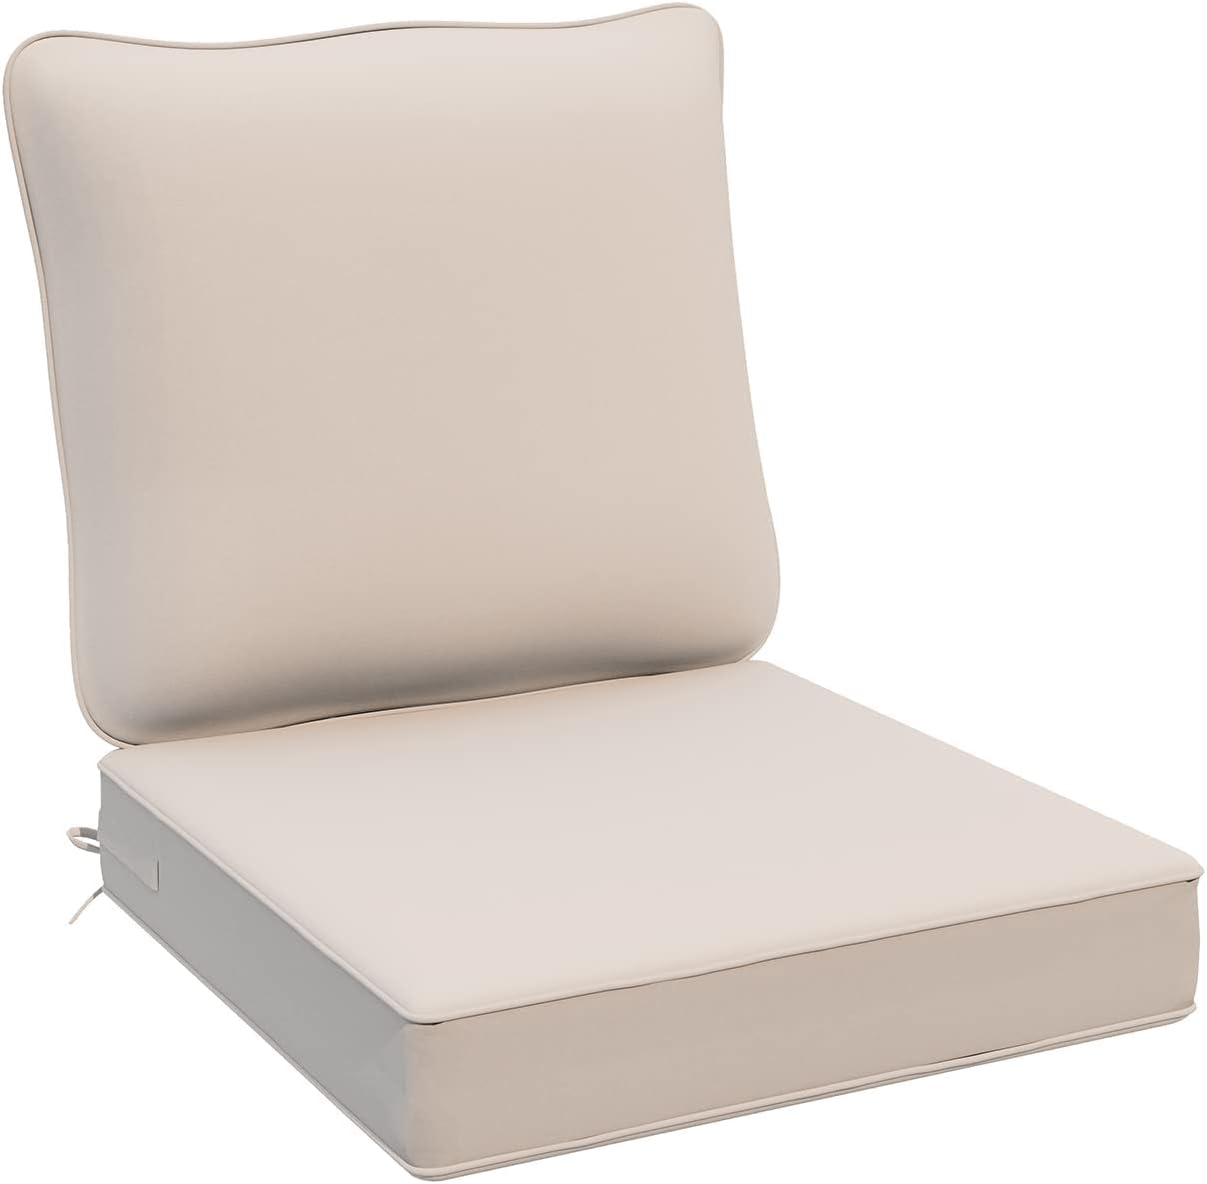 AAAAAcessories Outdoor Deep Seat Cushions for Patio Furniture